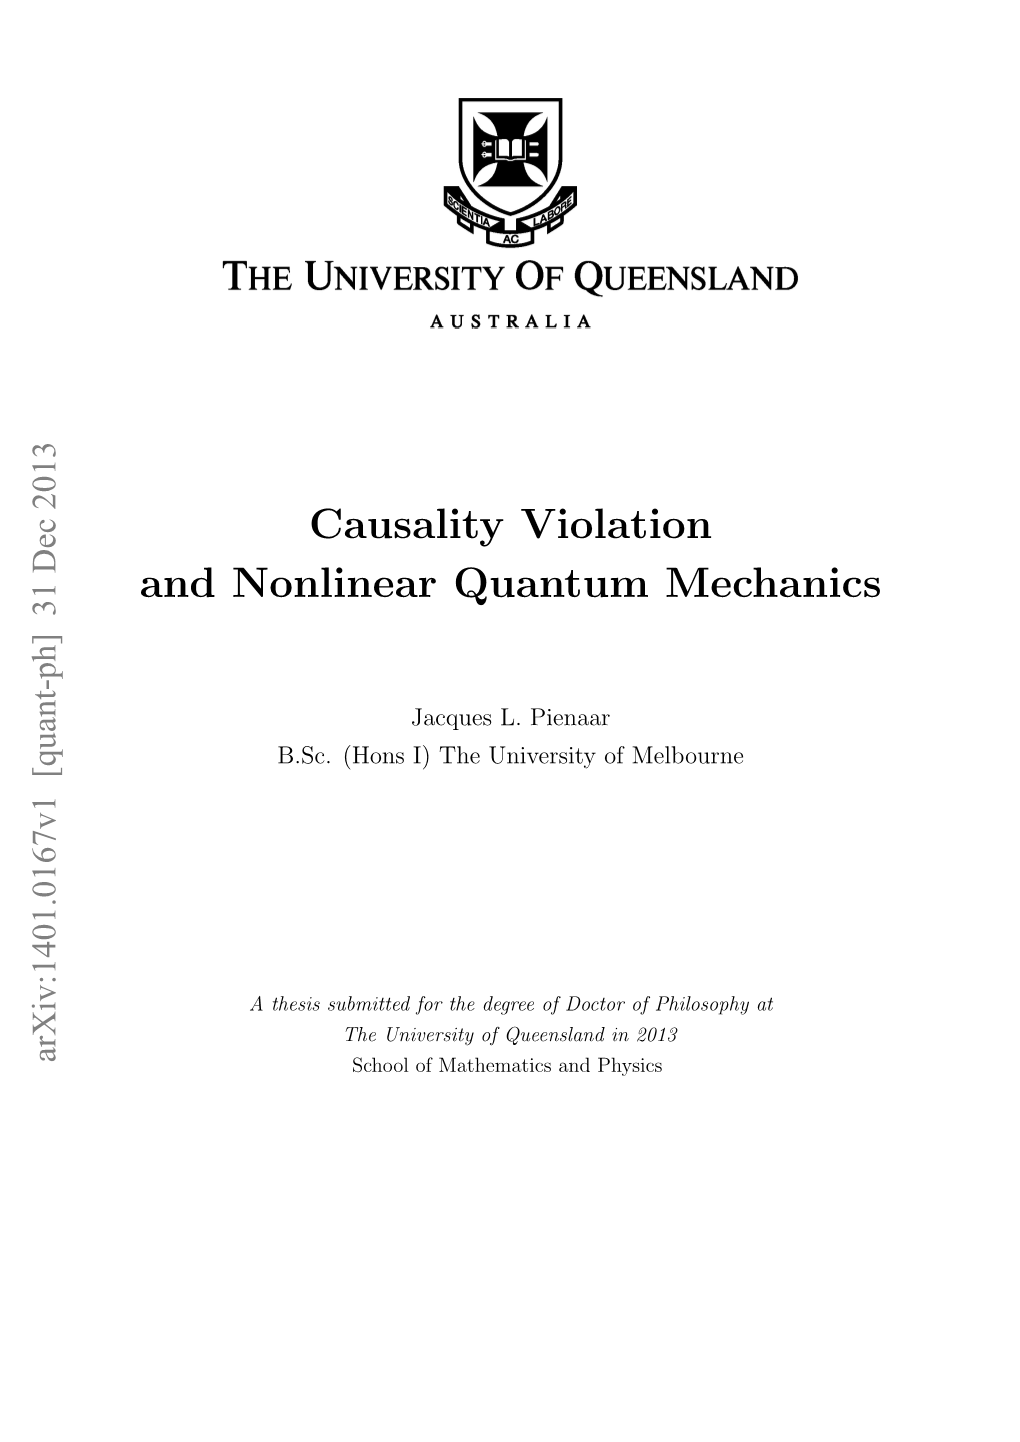 Causality Violation and Nonlinear Quantum Mechanics